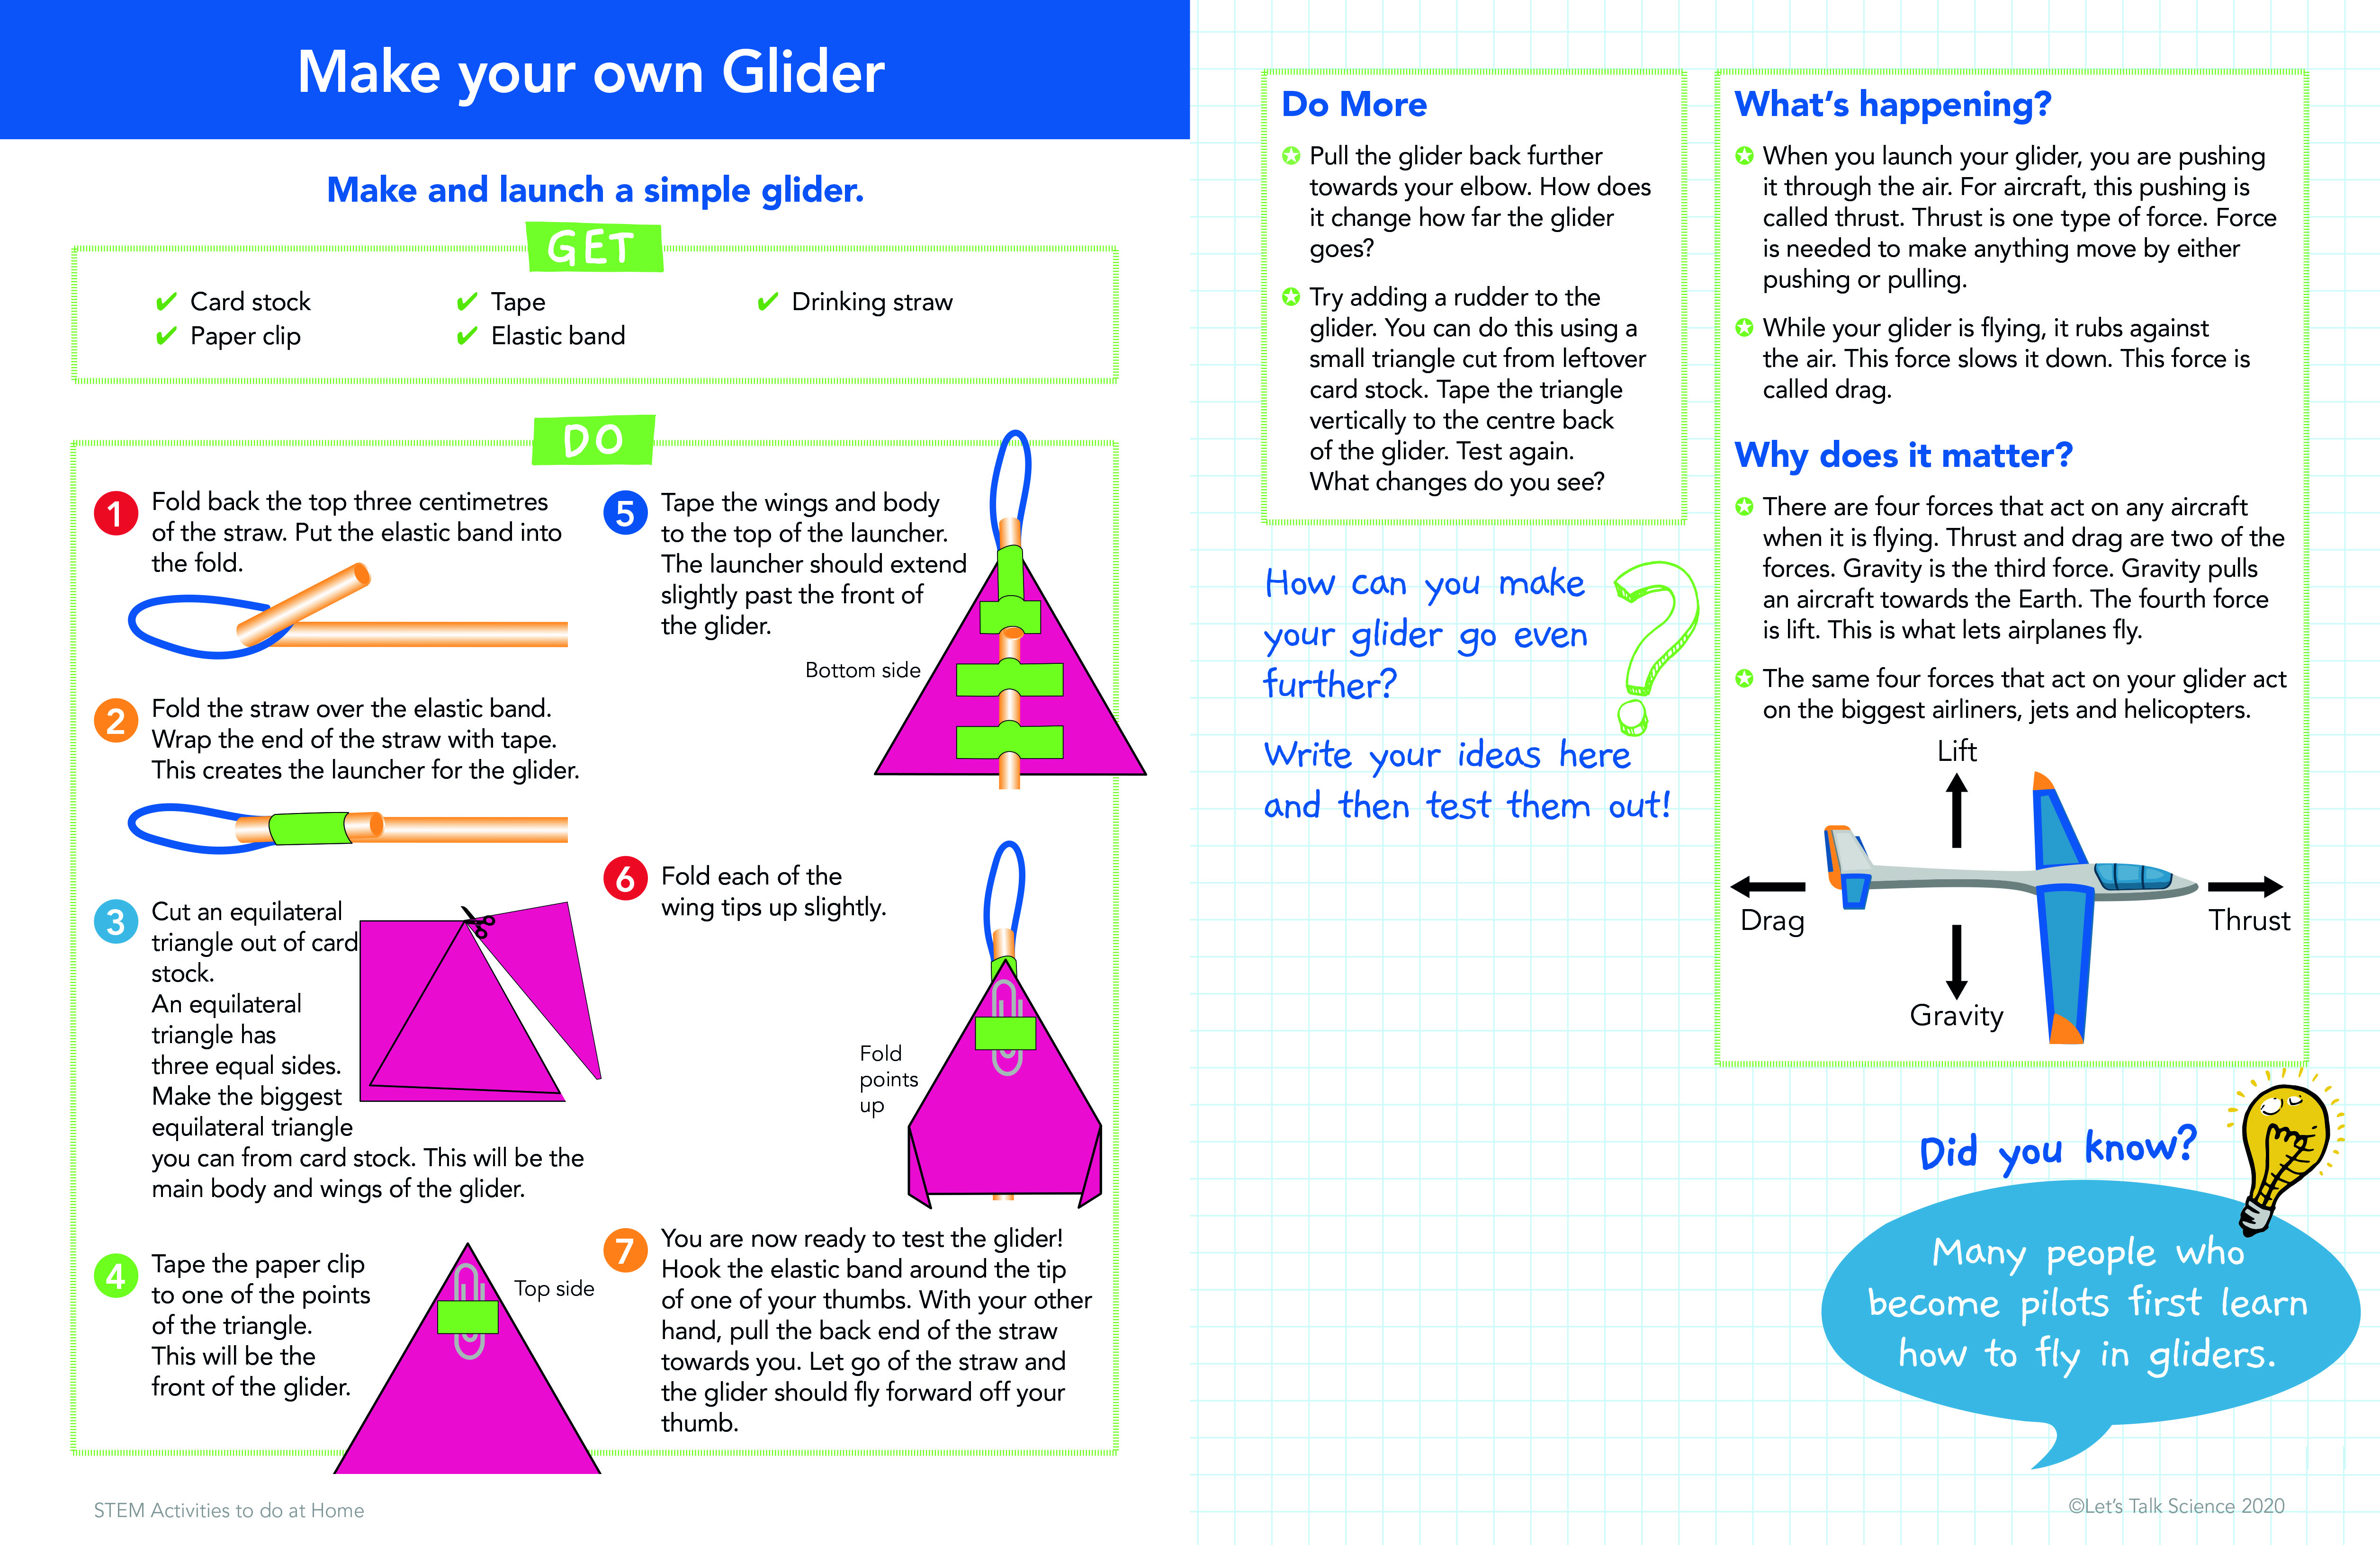 Make your own glider